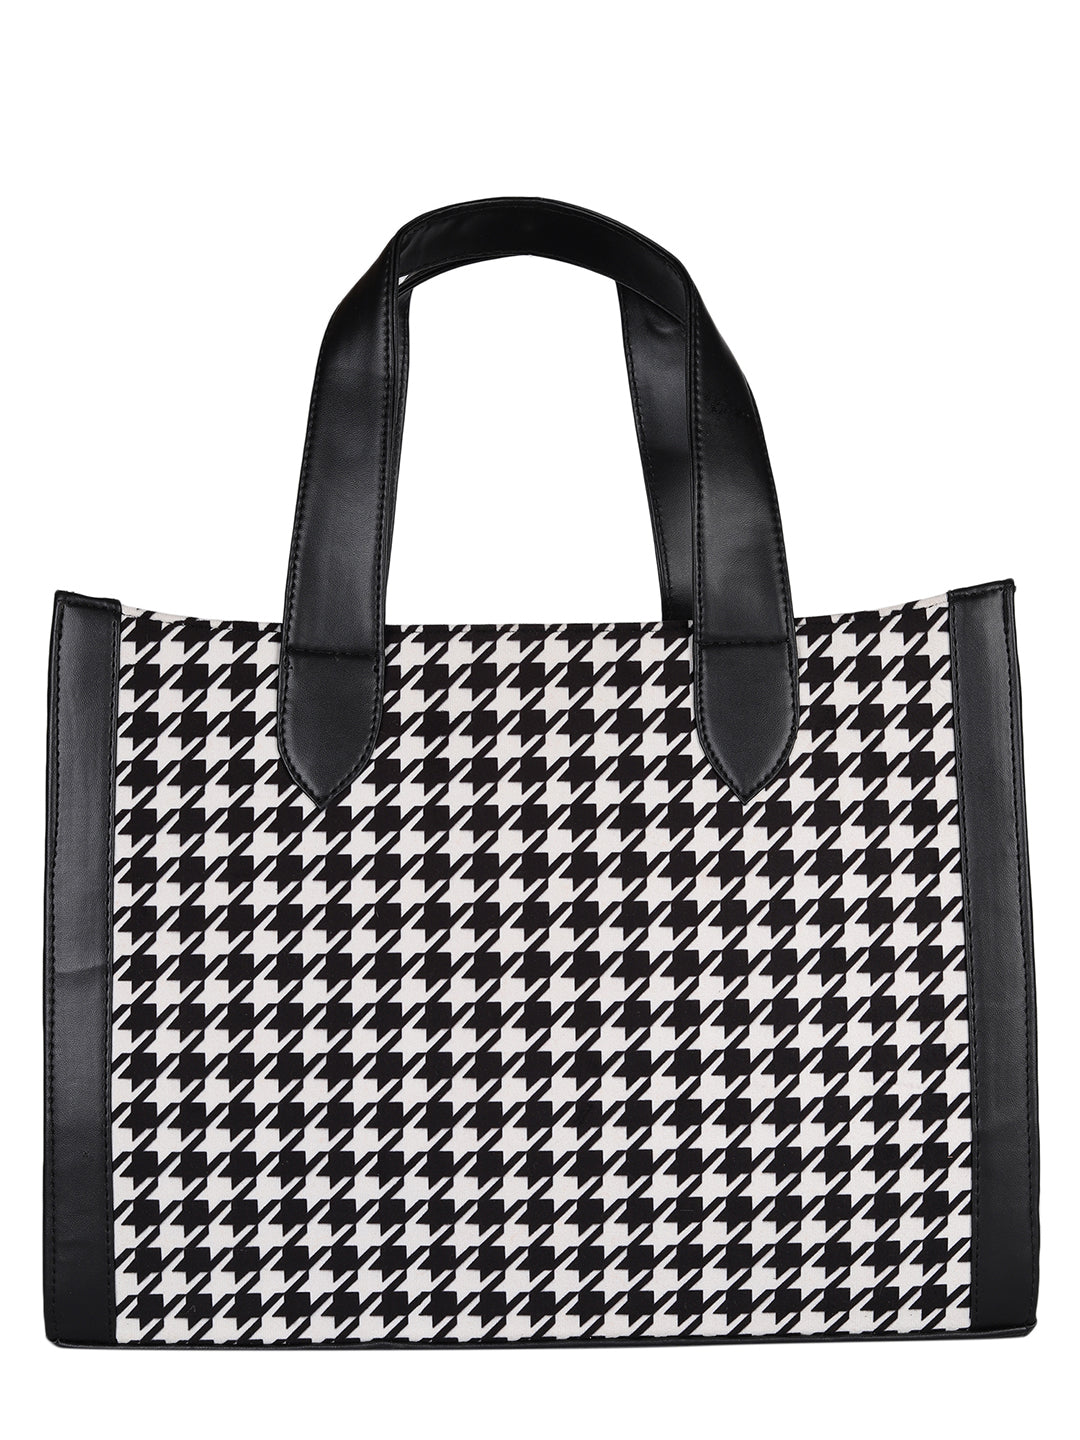 MINI WESST Black And White Textured Tote Bag(MWTB097MH)